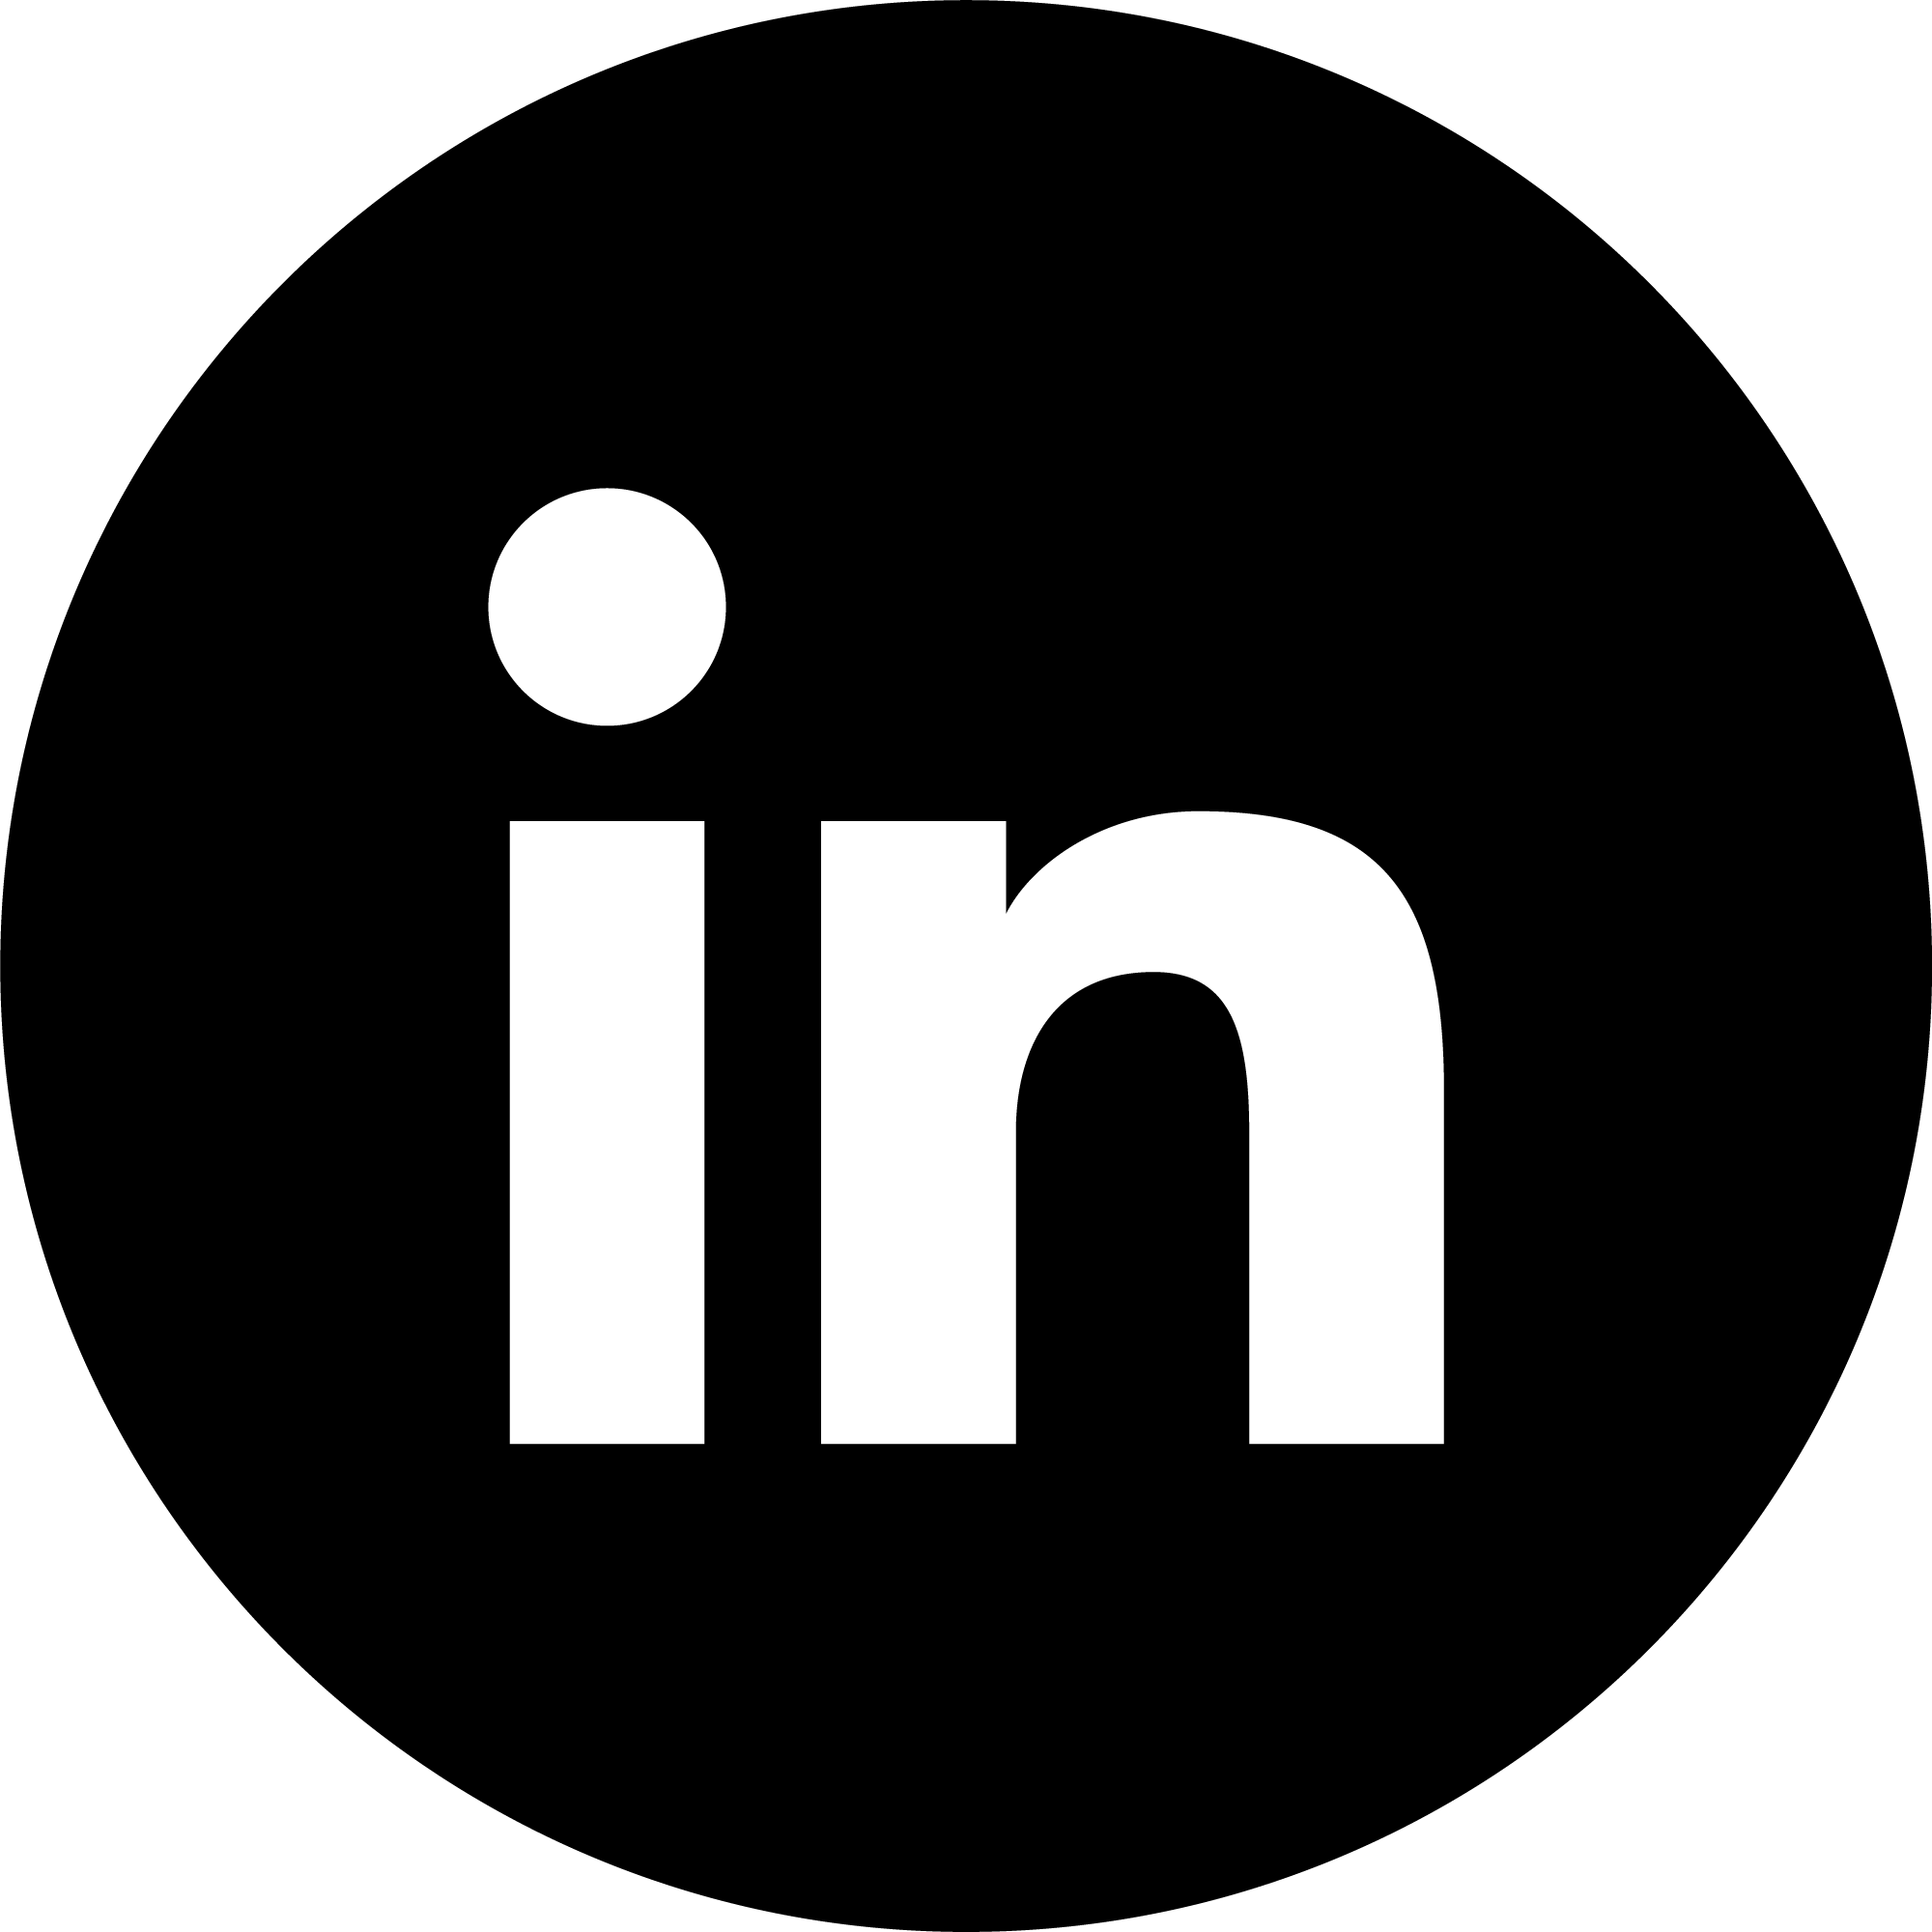 linkedin logo for email signature